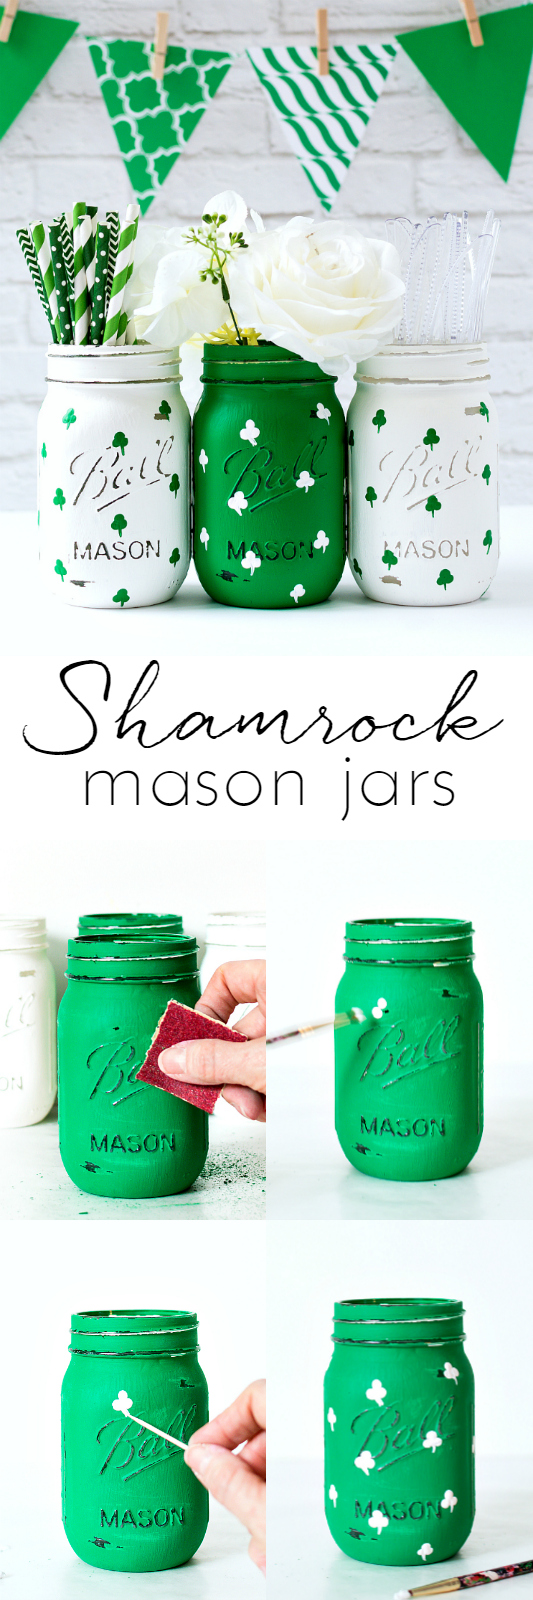 Shamrock Mason Jars - St. Patrick's Day Craft Ideas with Mason Jars www.masonjarcraftslove.com